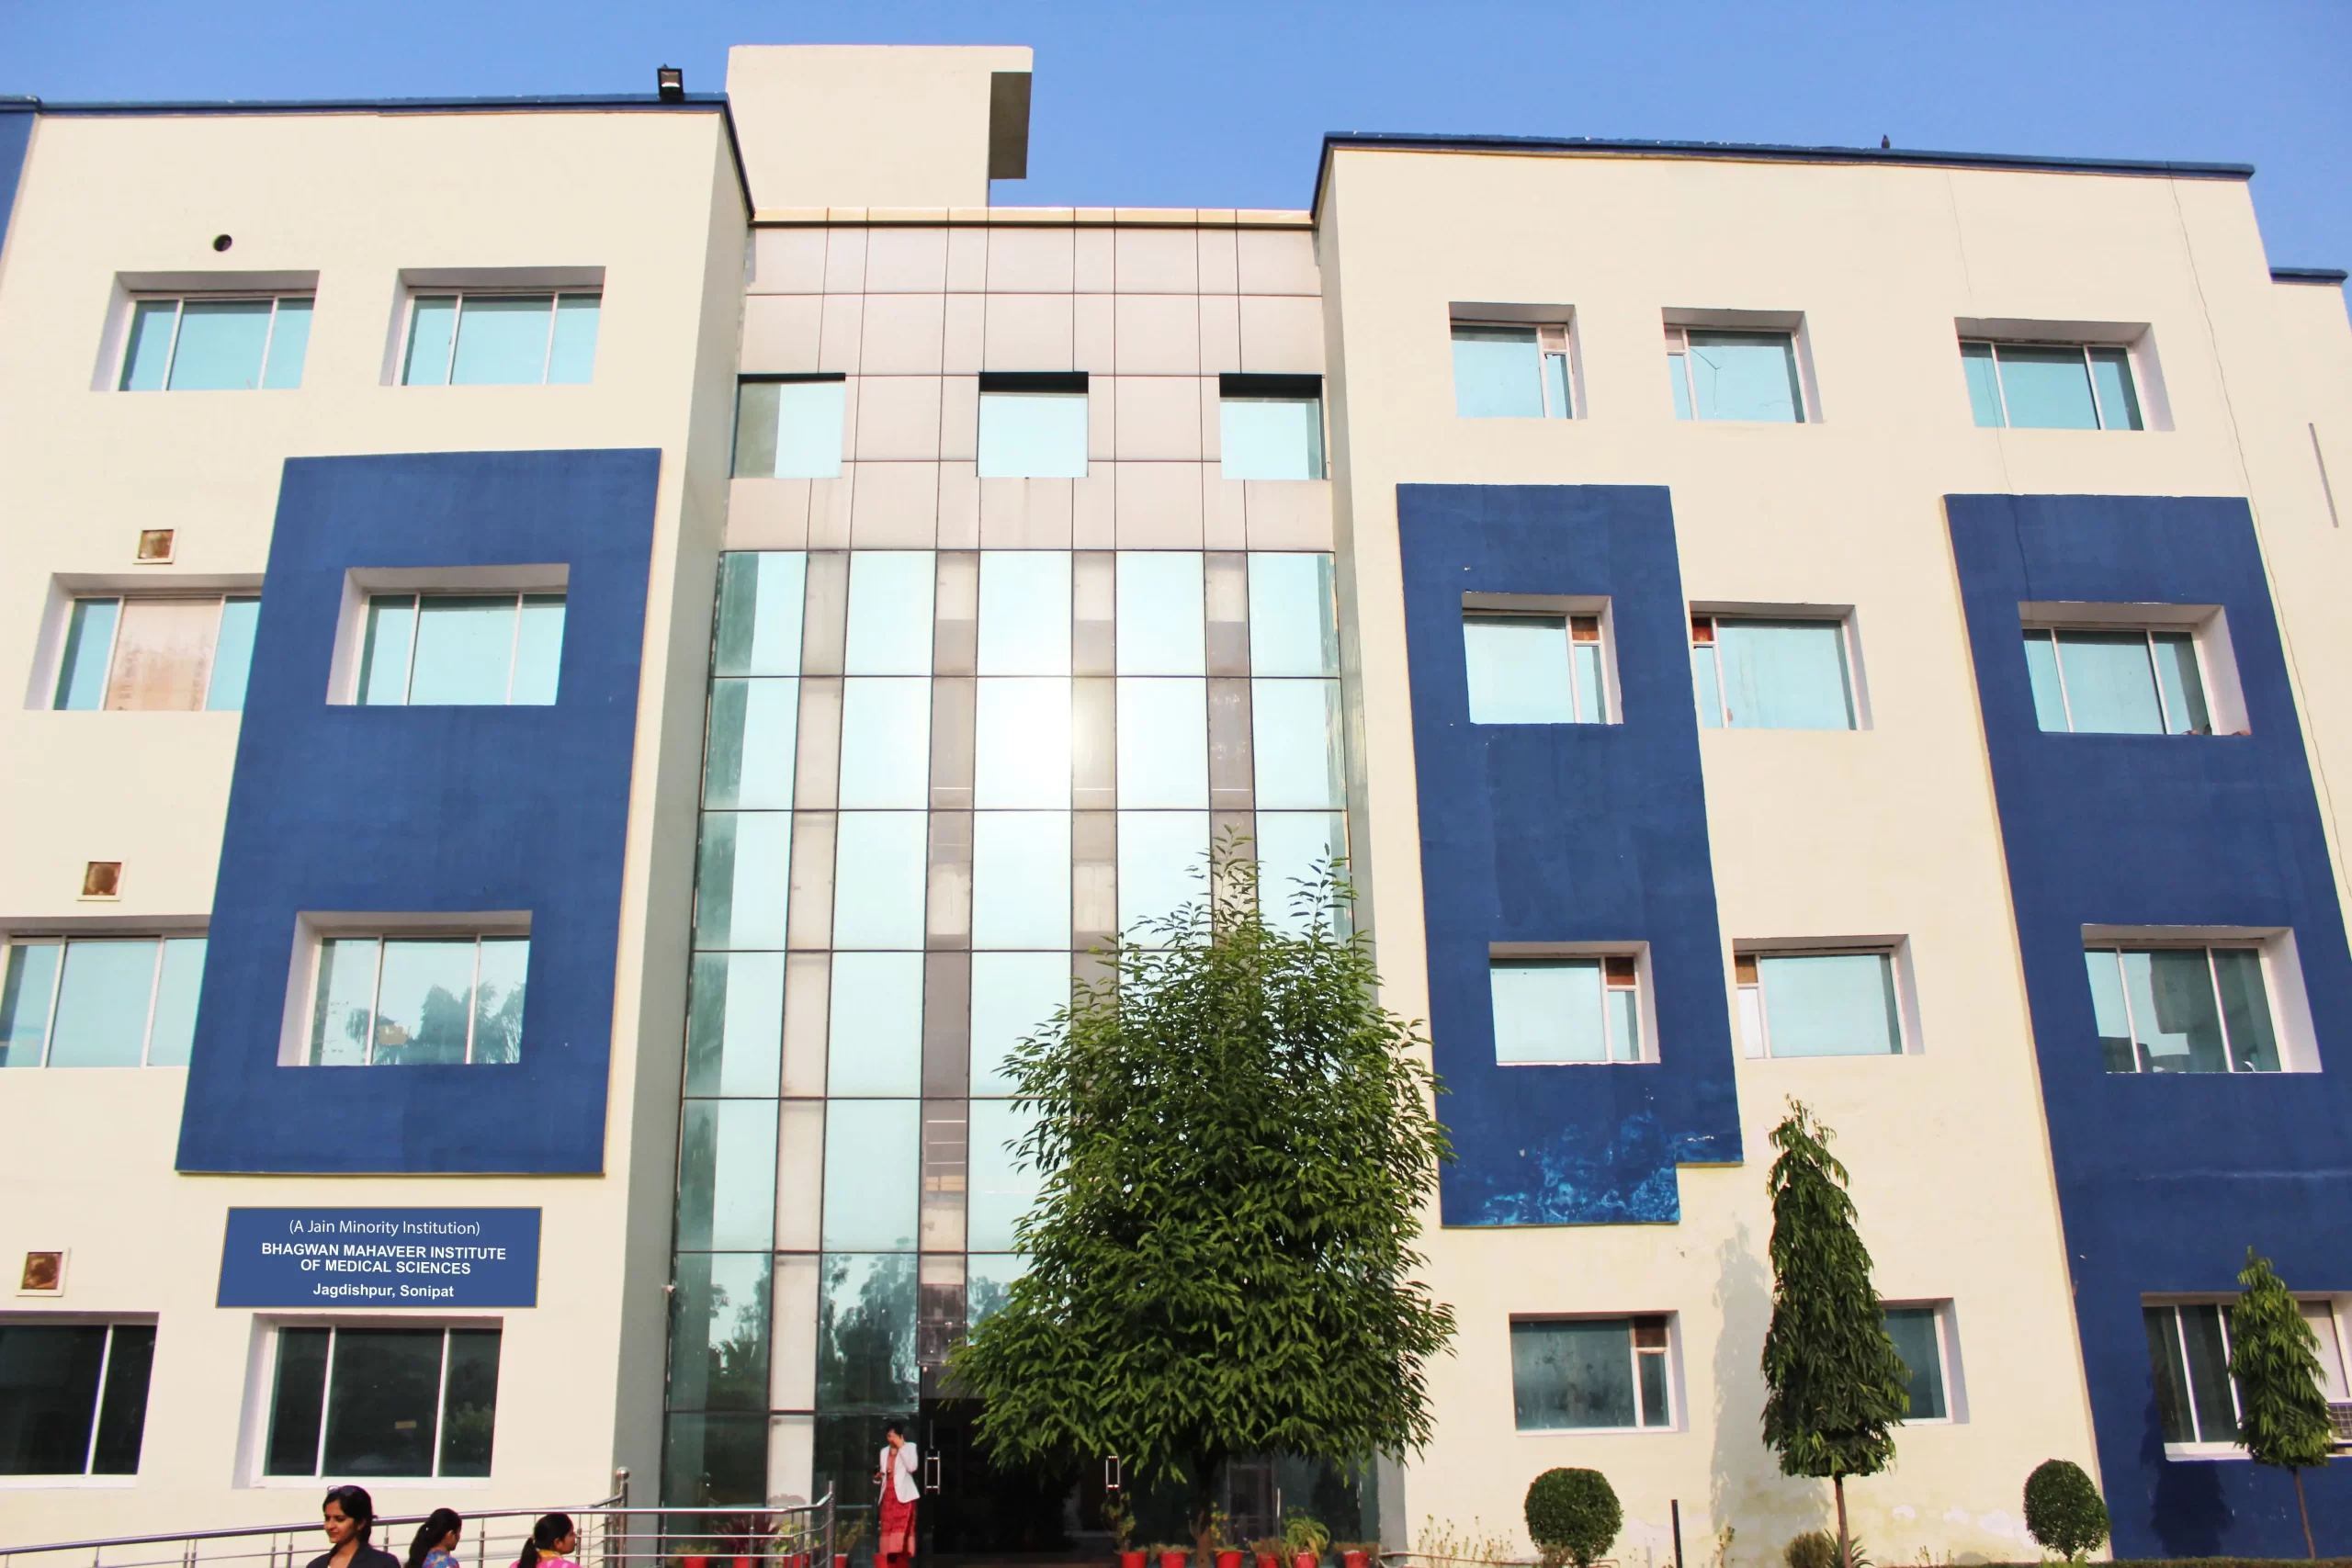 Bhagwan Mahaveer Institute of Medical Sciences